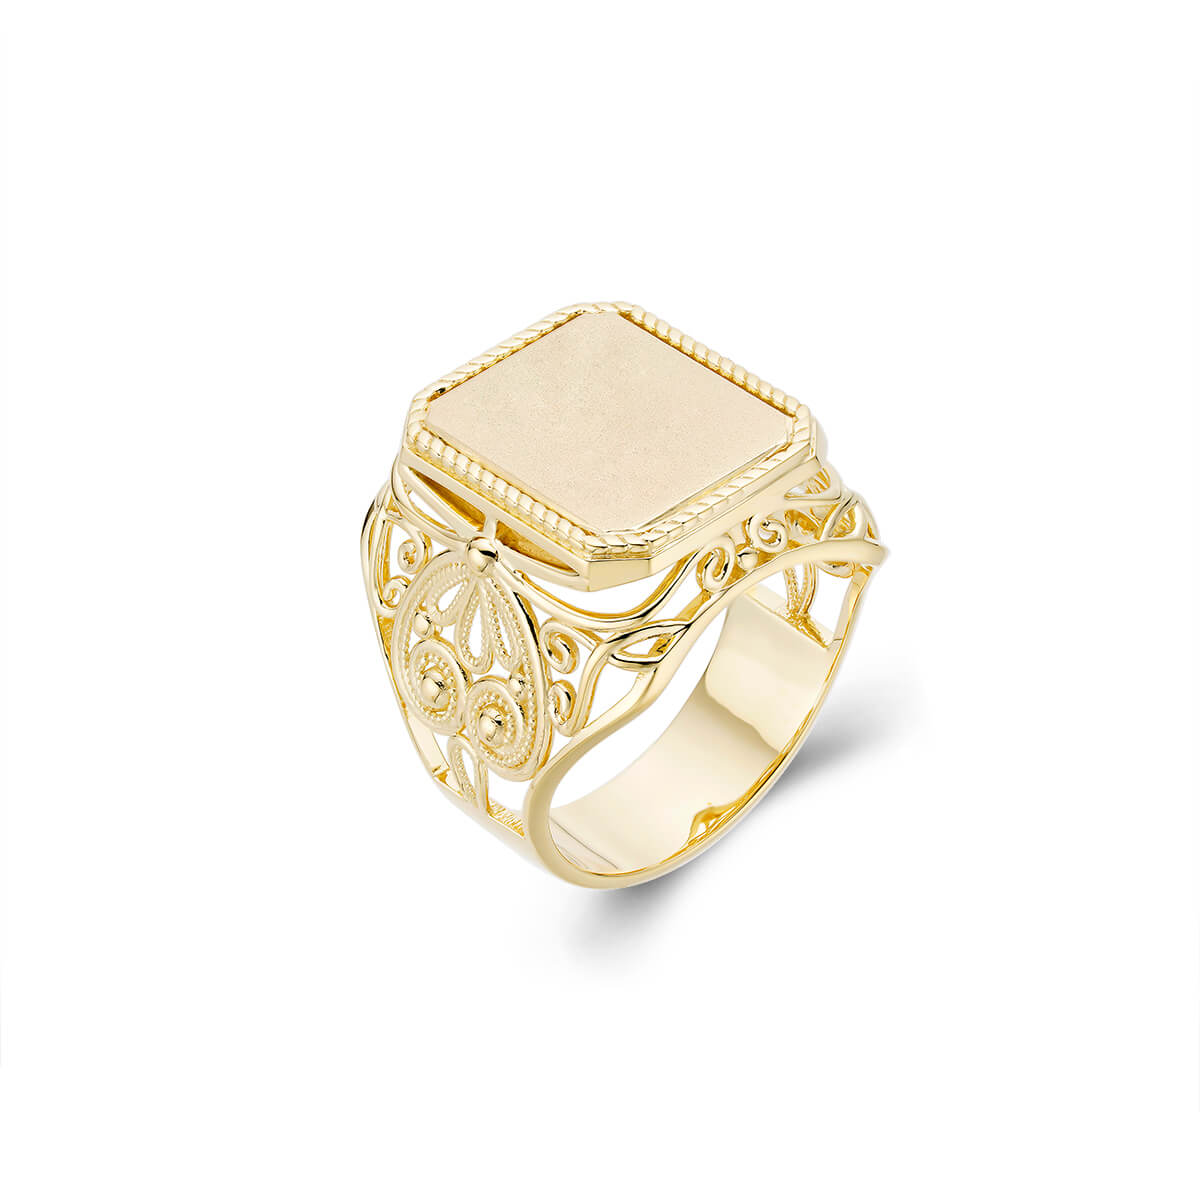 Kooljewelry 14k Yellow Gold Rectangular Signet Ring (mens or womens, 12.7  mm)|Amazon.com